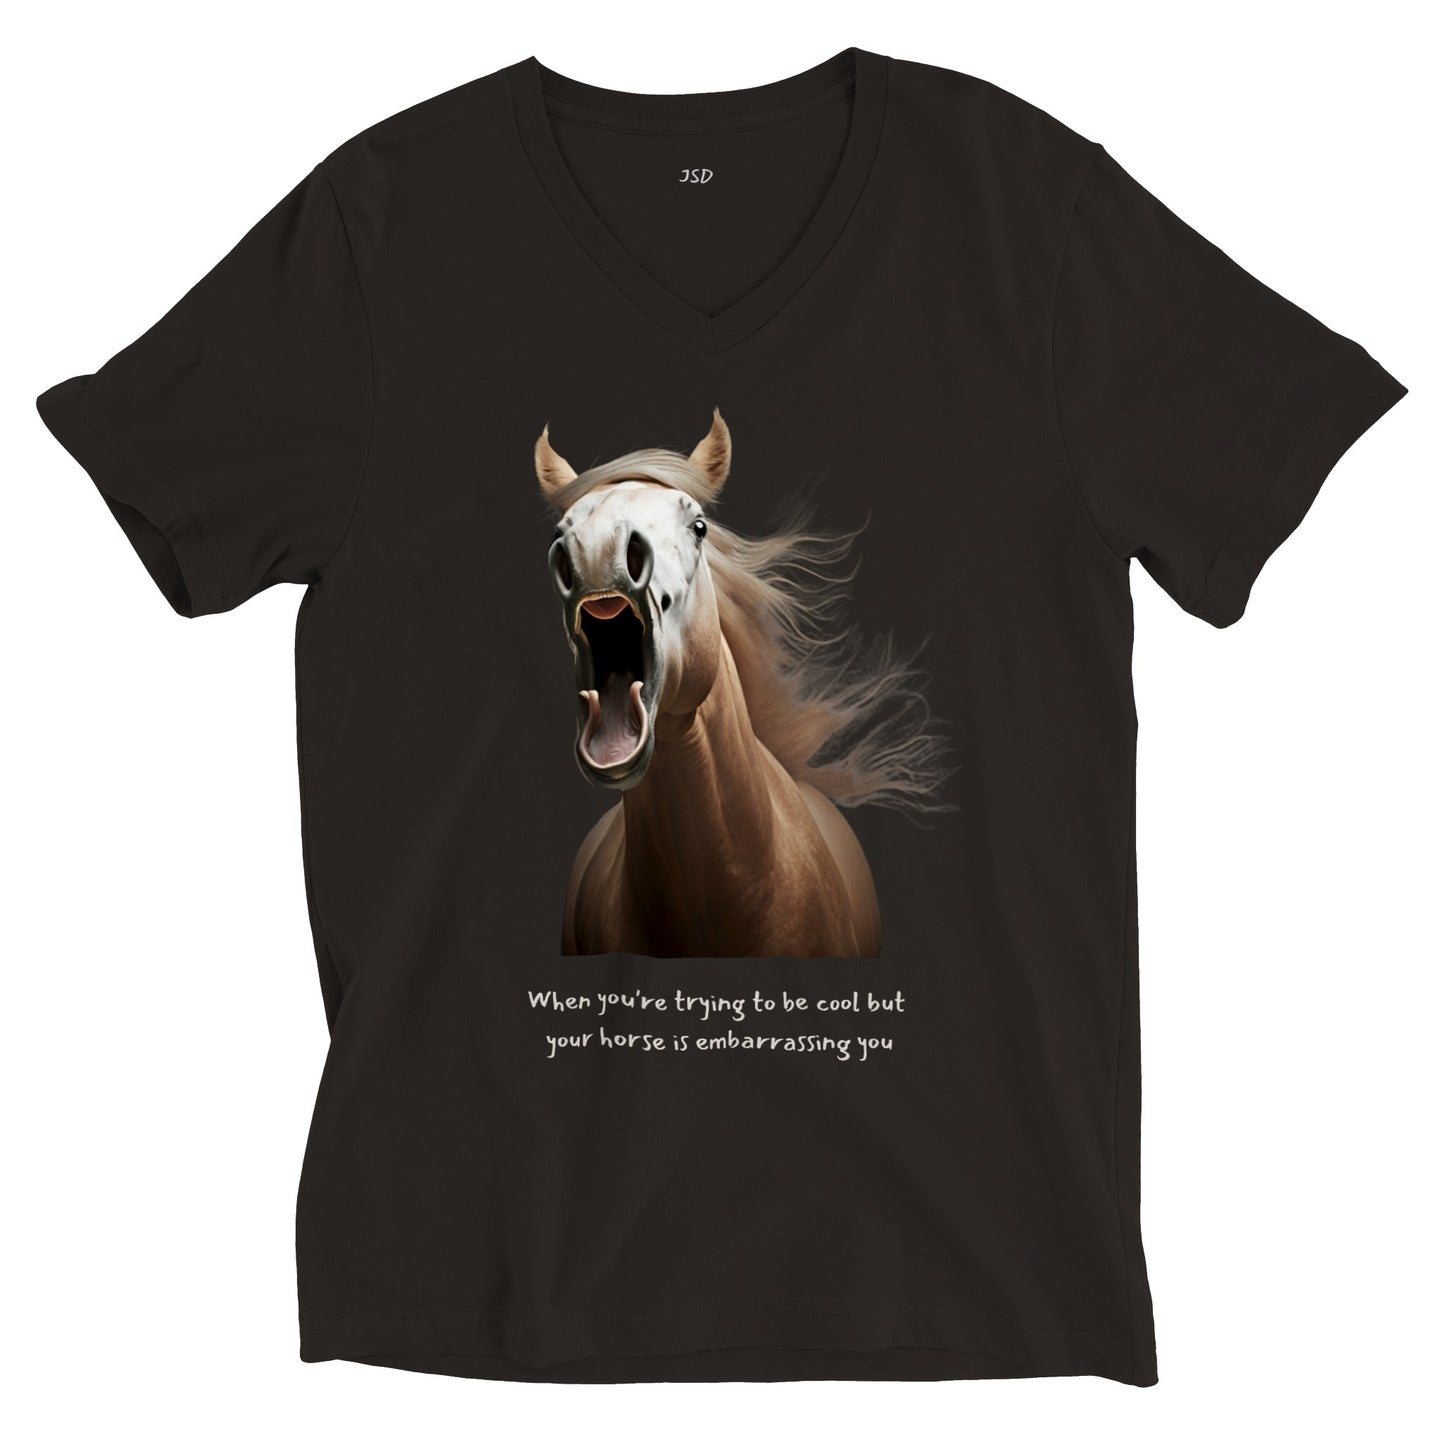 Funny horse T-shirt